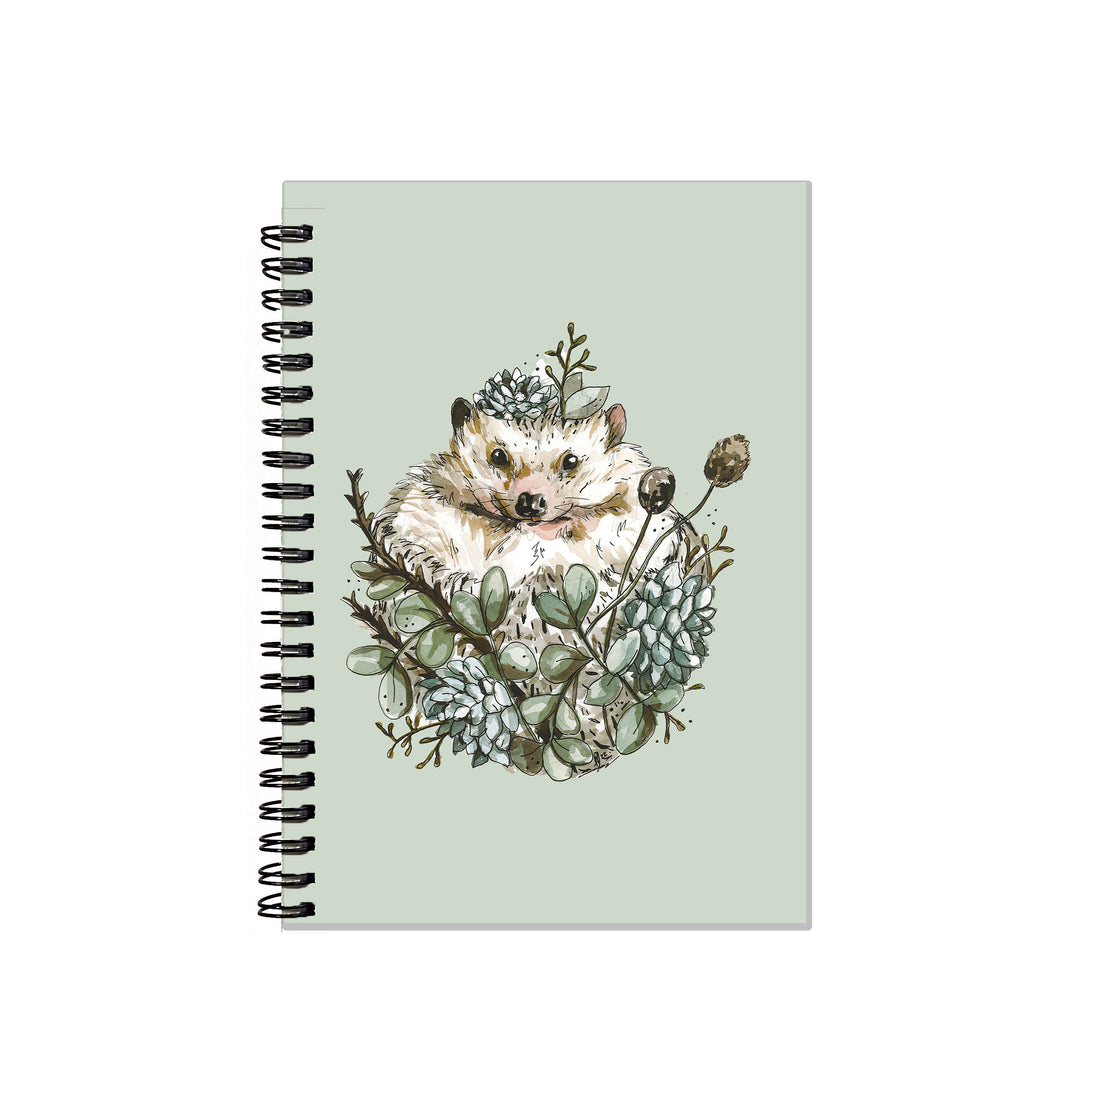 Hedgehog notebook